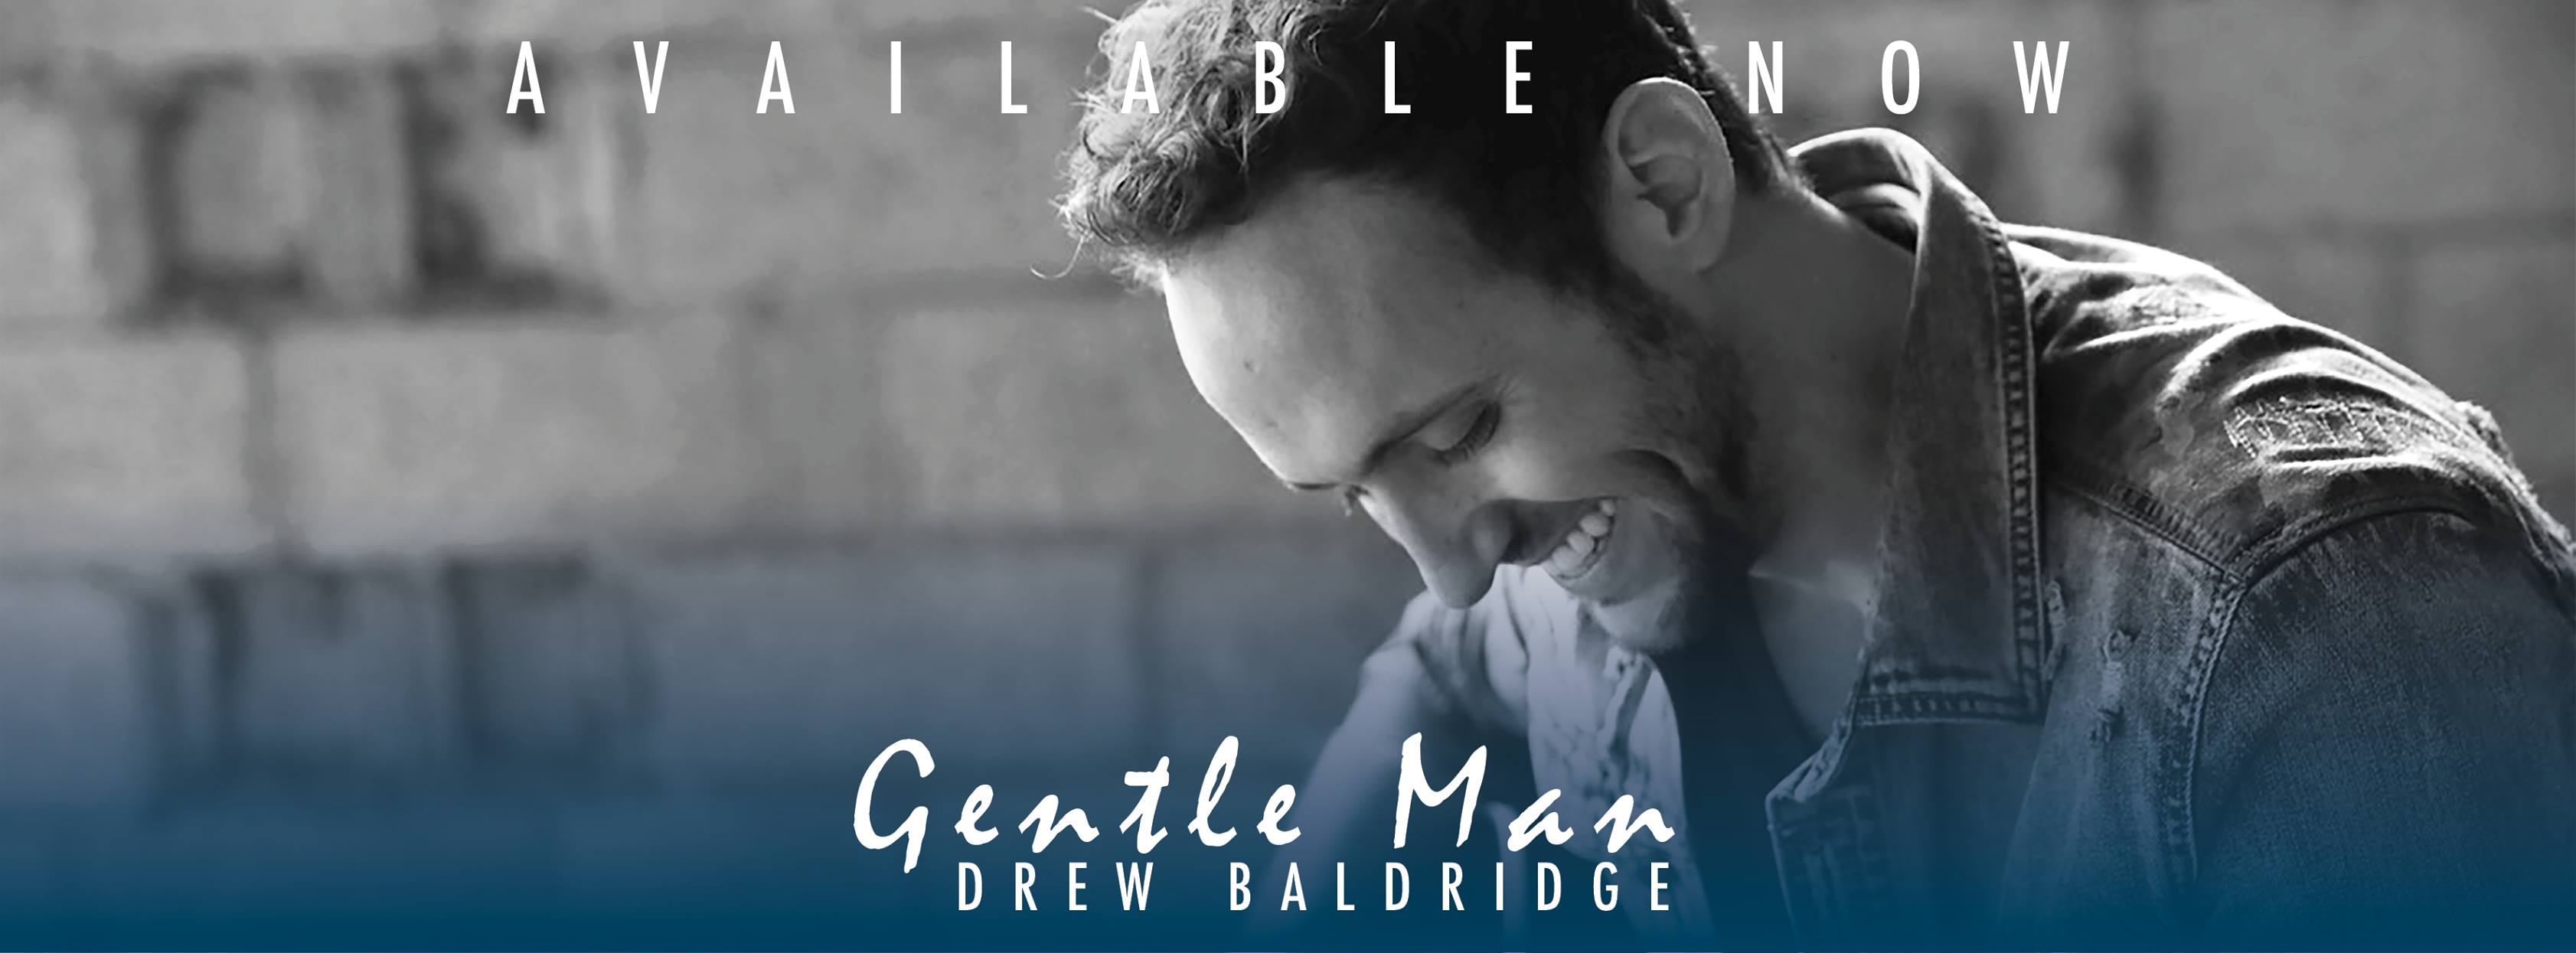 Drew Baldridge Talks About ‘W.E.R.D’, His Single ‘Gentle Man’ & More